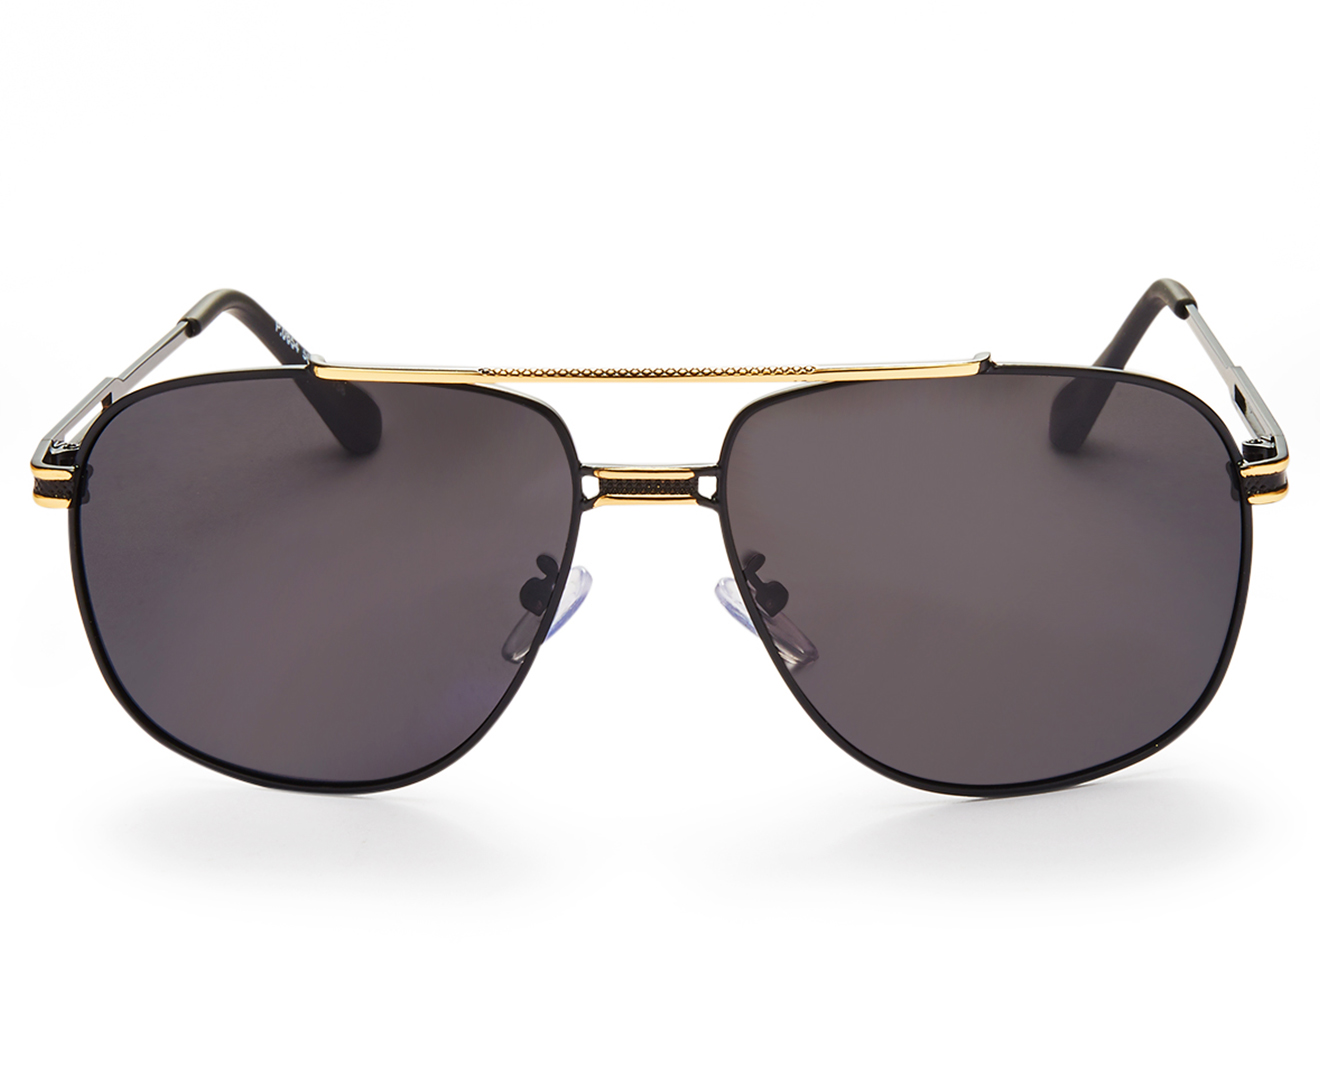 Winstonne Bentley Polarised Sunglasses - Black/Gold | GroceryRun.com.au